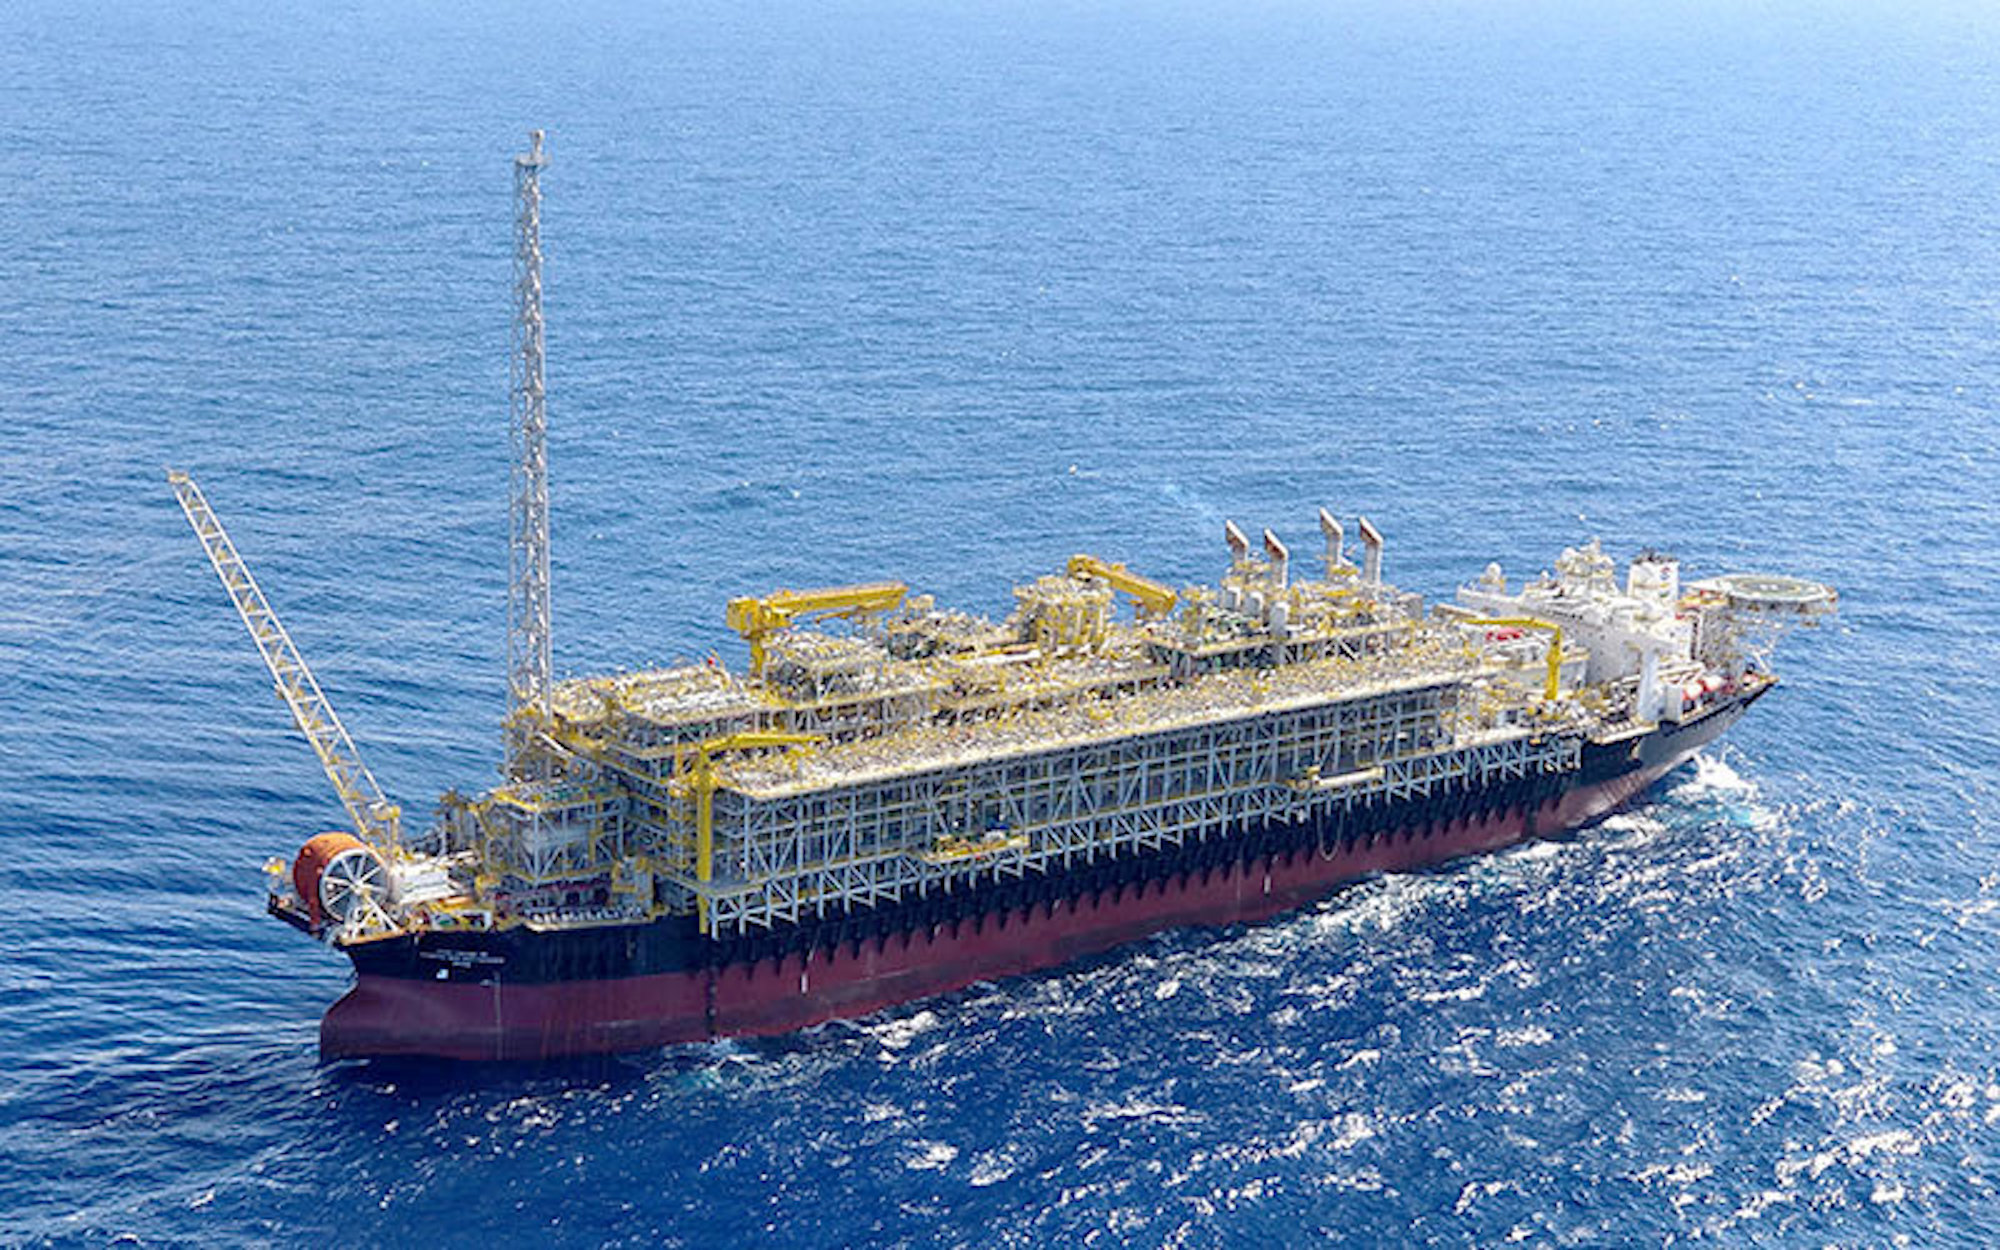 Brazil-bound oil and gas platform Anita Garibaldi leaves Dalian shipyard